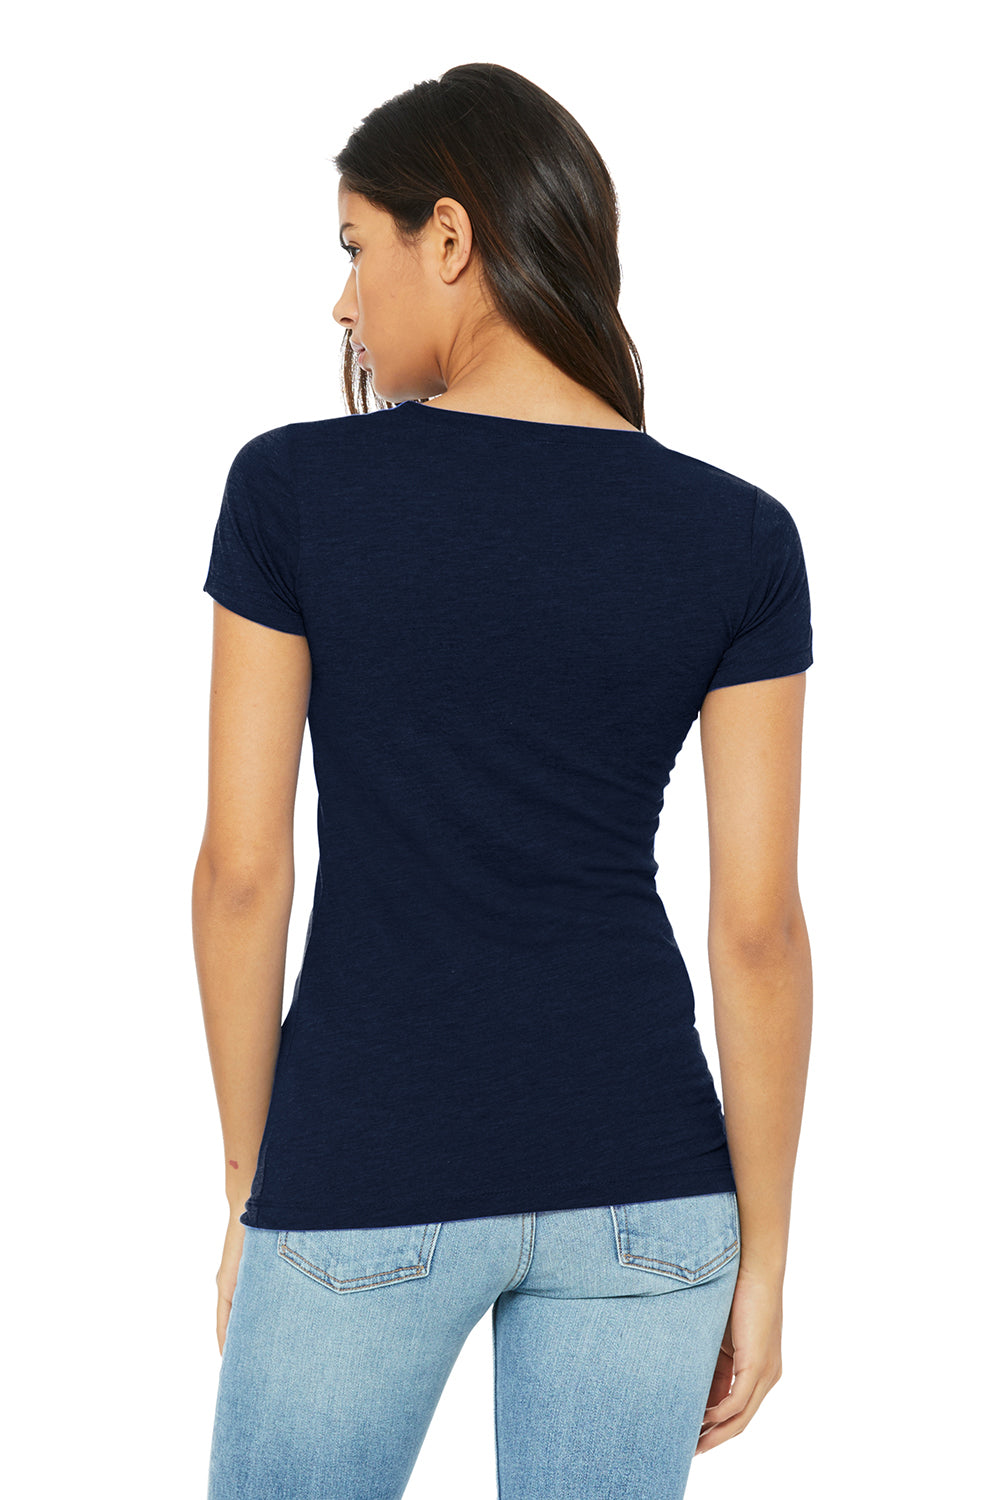 Bella + Canvas BC6004/6004 Womens The Favorite Short Sleeve Crewneck T-Shirt Navy Blue Model Back